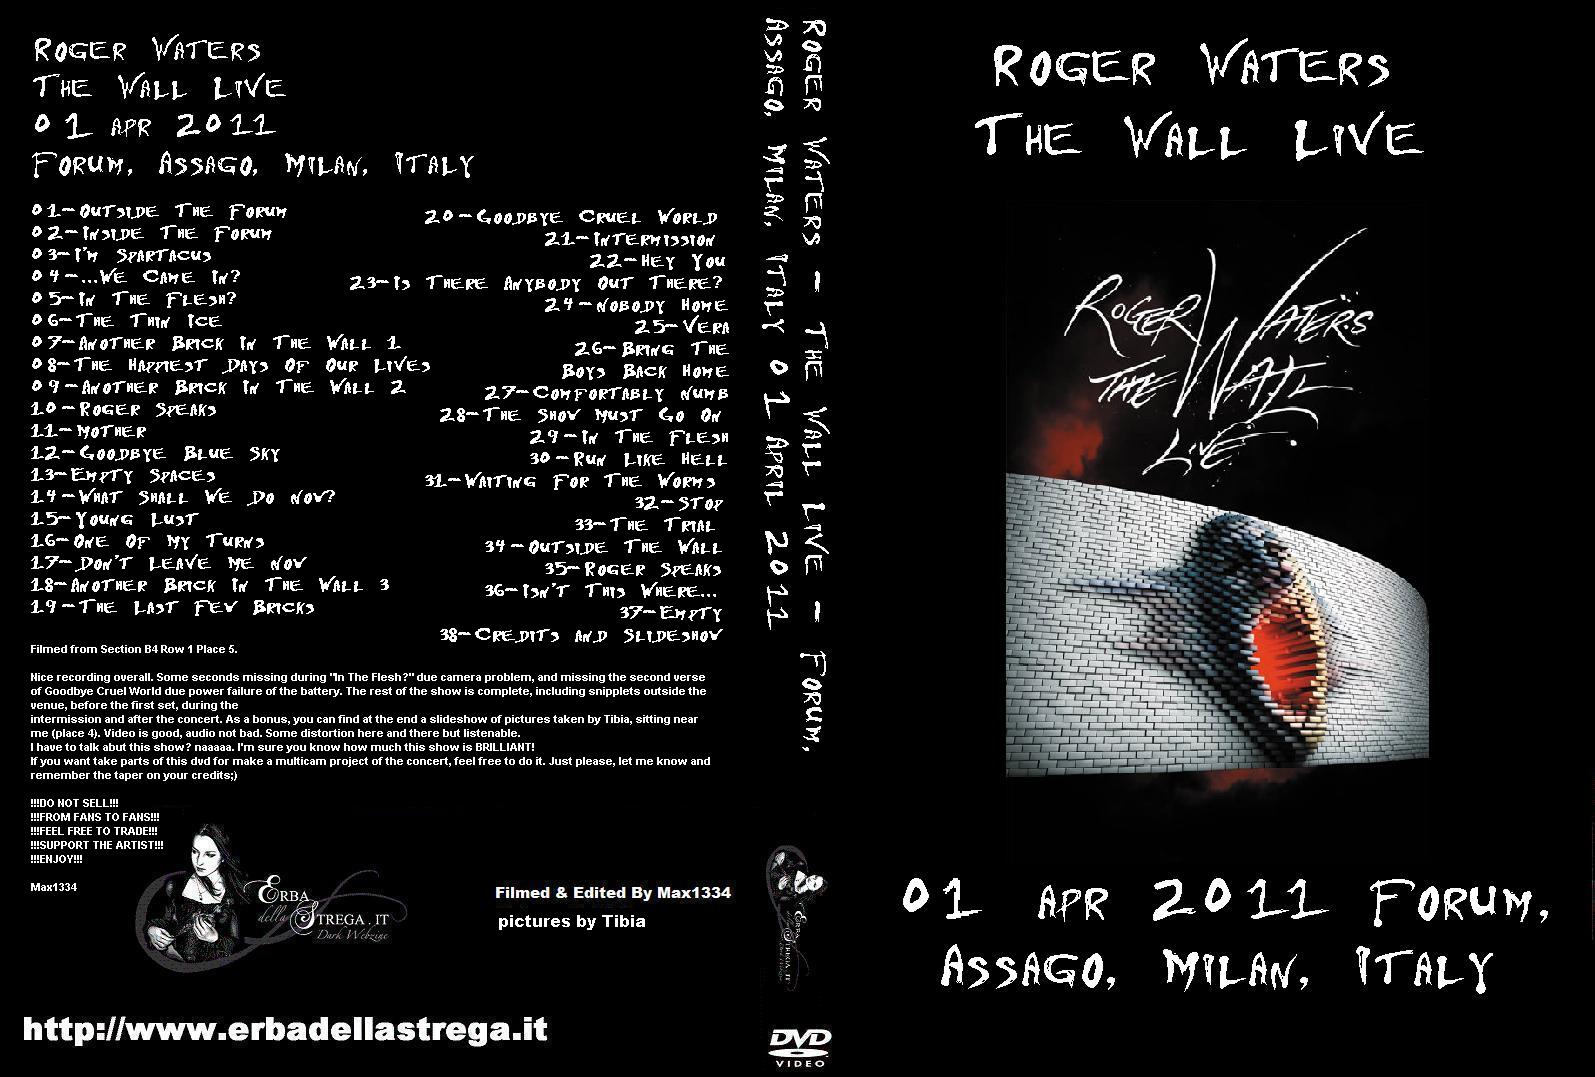 http://1.bp.blogspot.com/-avGKzueVaok/Tai4tTNgvMI/AAAAAAAAChg/oiYUWjSYsJE/s1600/DVD+Cover+-+2011-04-01+-+Roger+Waters+-+The+Wall+Live+-+Forum%252C+Assago%252C+Milan%252C+Italy.JPG